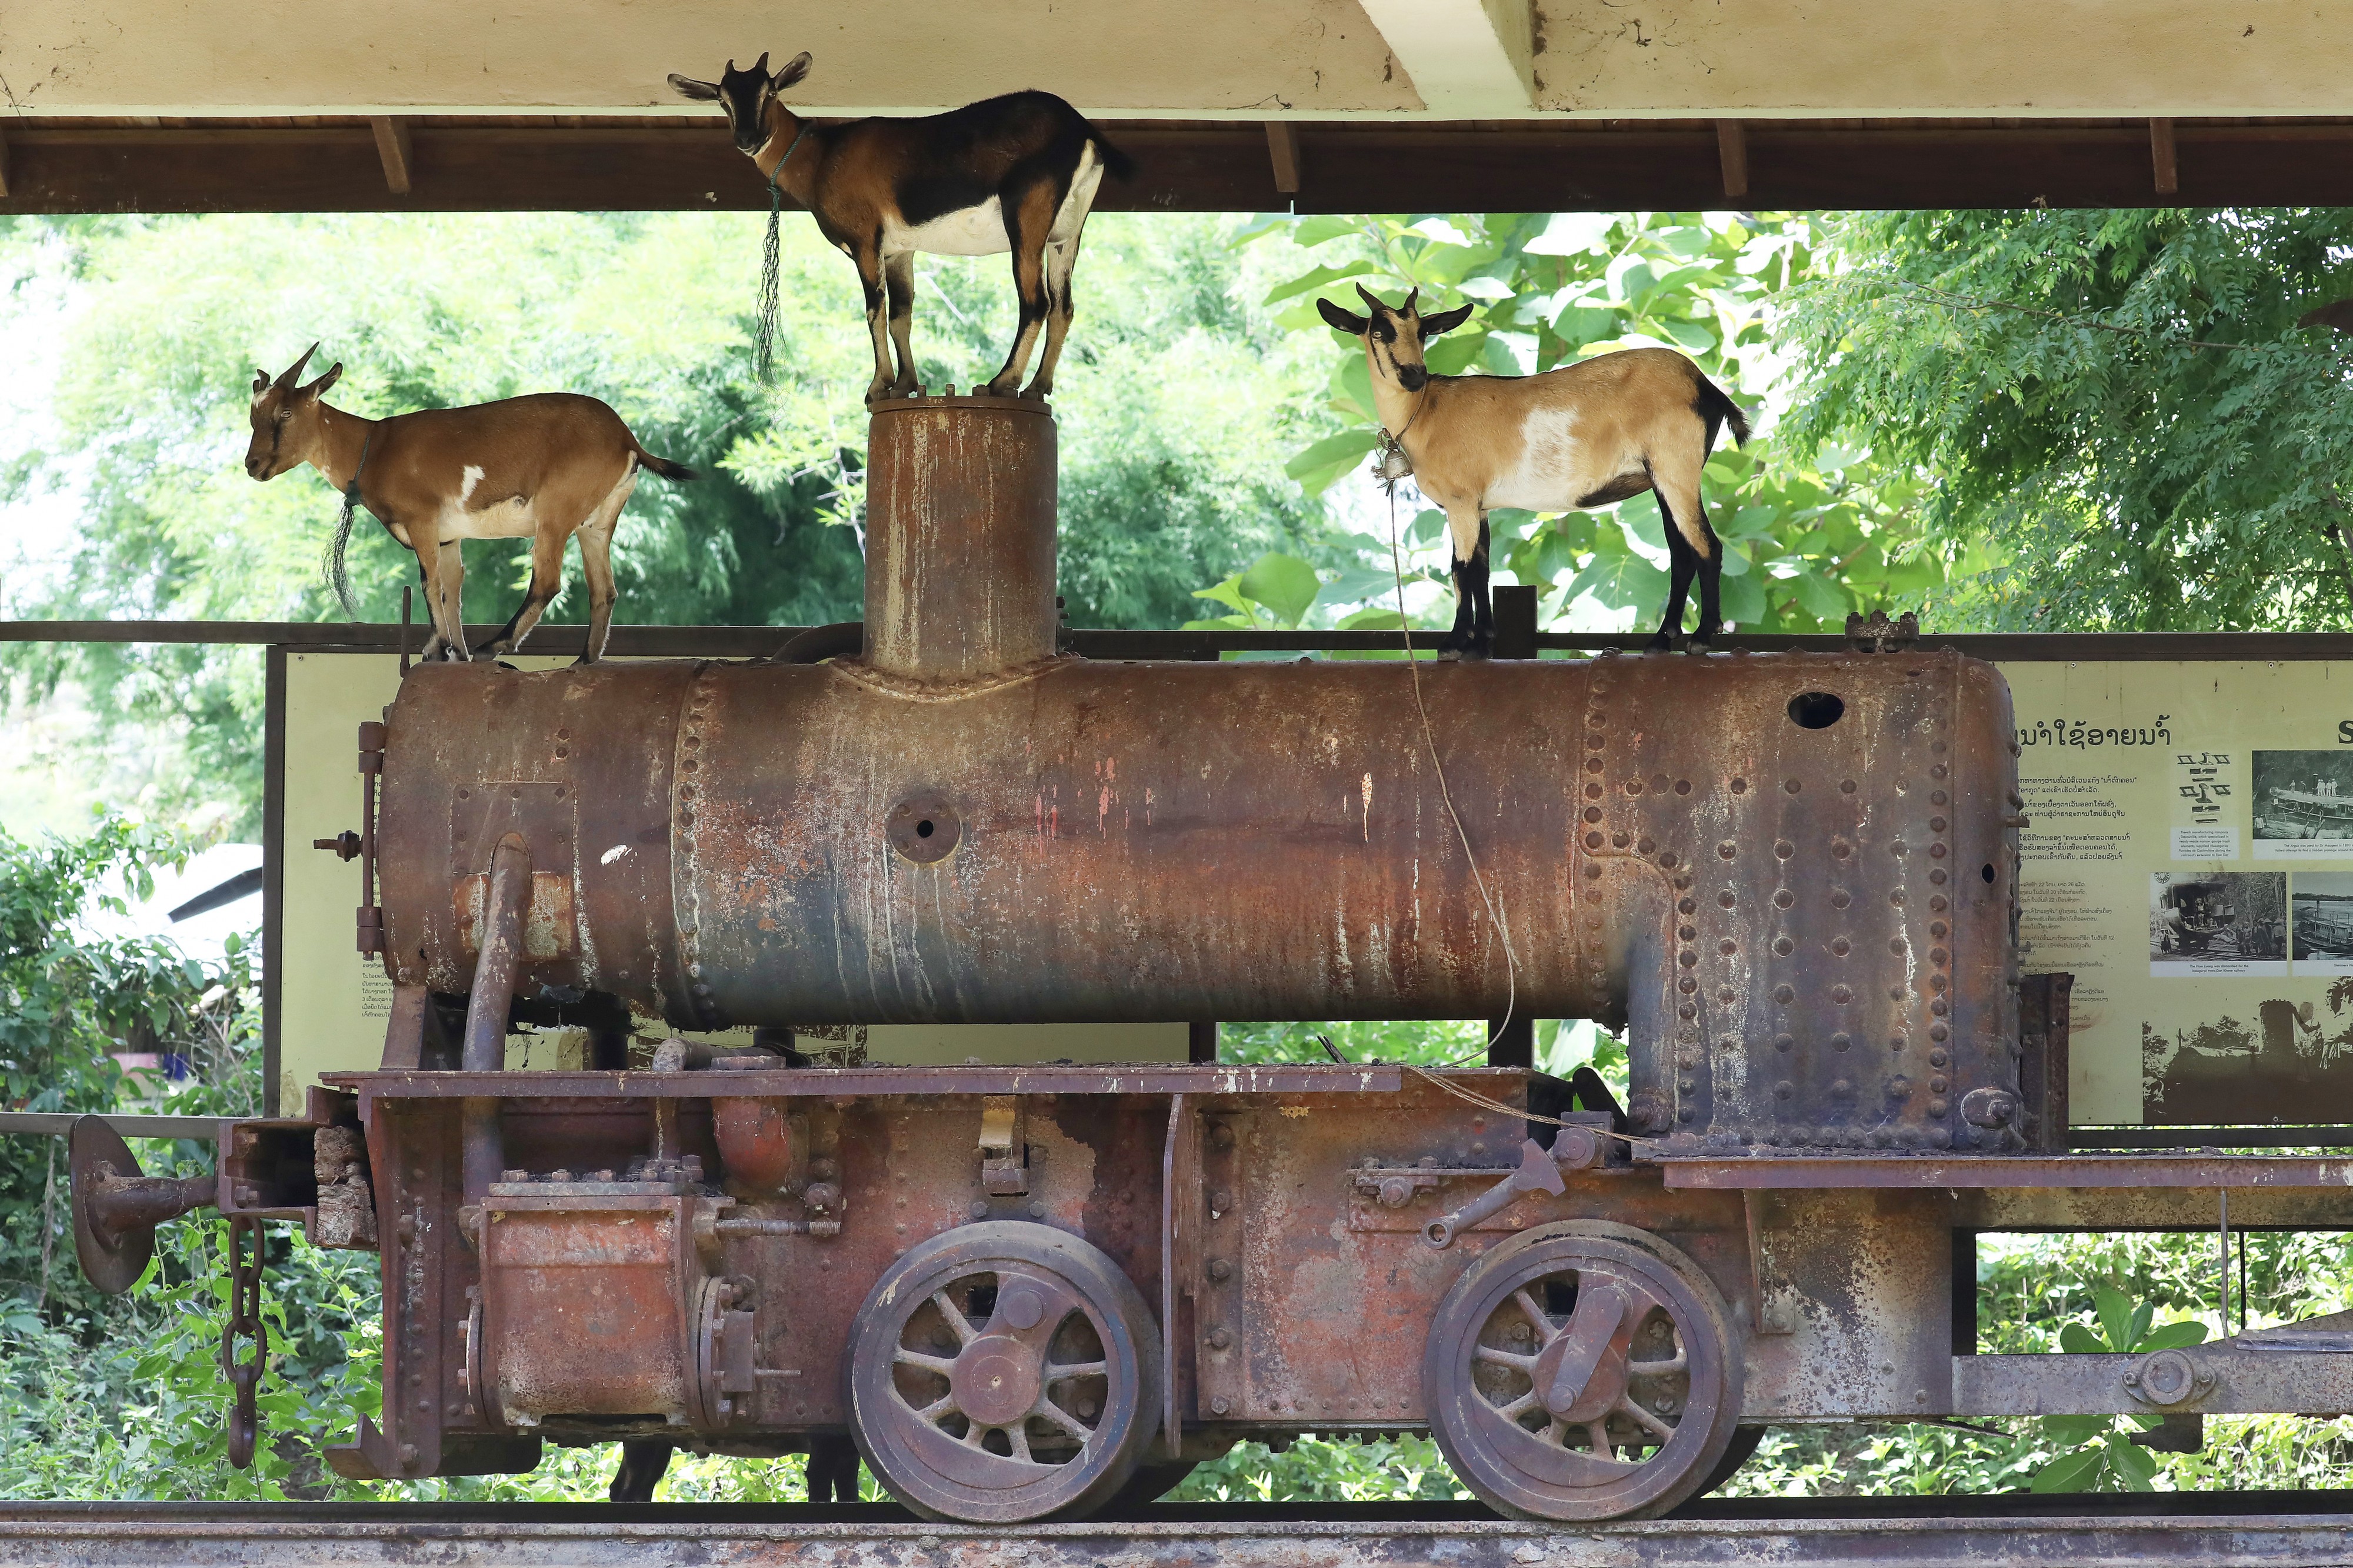 Historic locomotive hosting goats in Don Khon, Si Phan Don, Laos